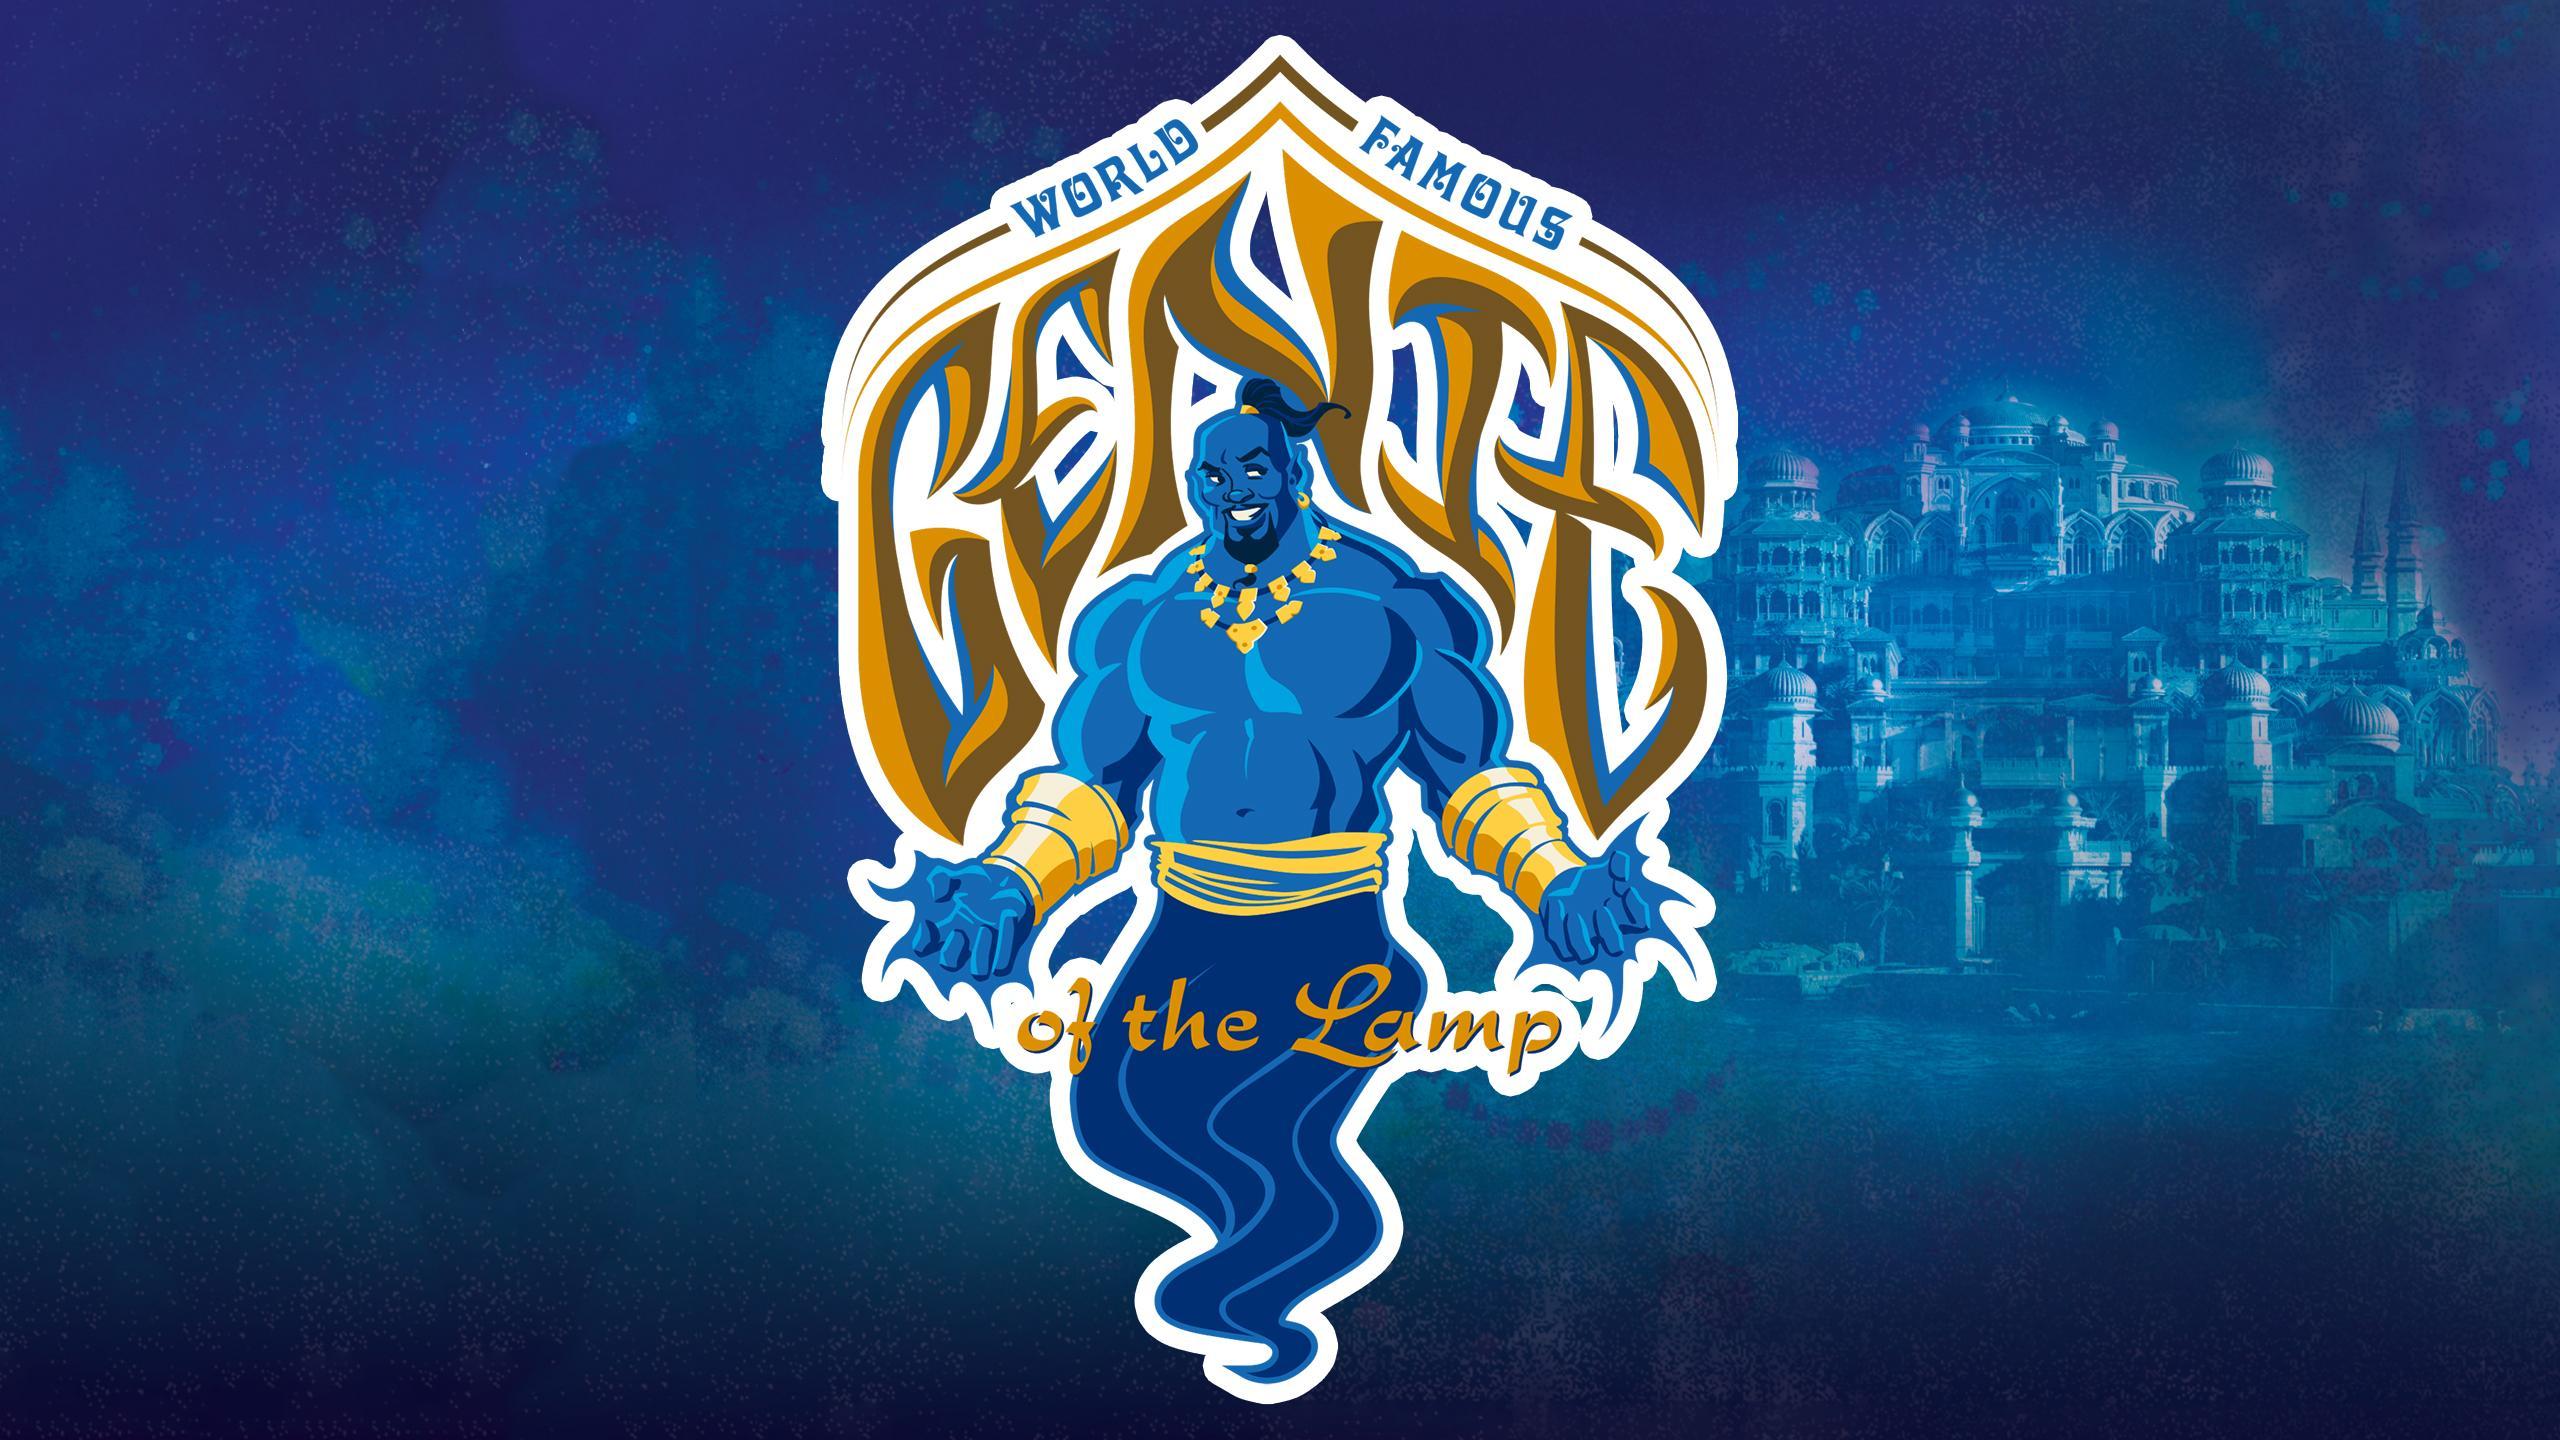 Aladdin 2019 Genie Wallpaper